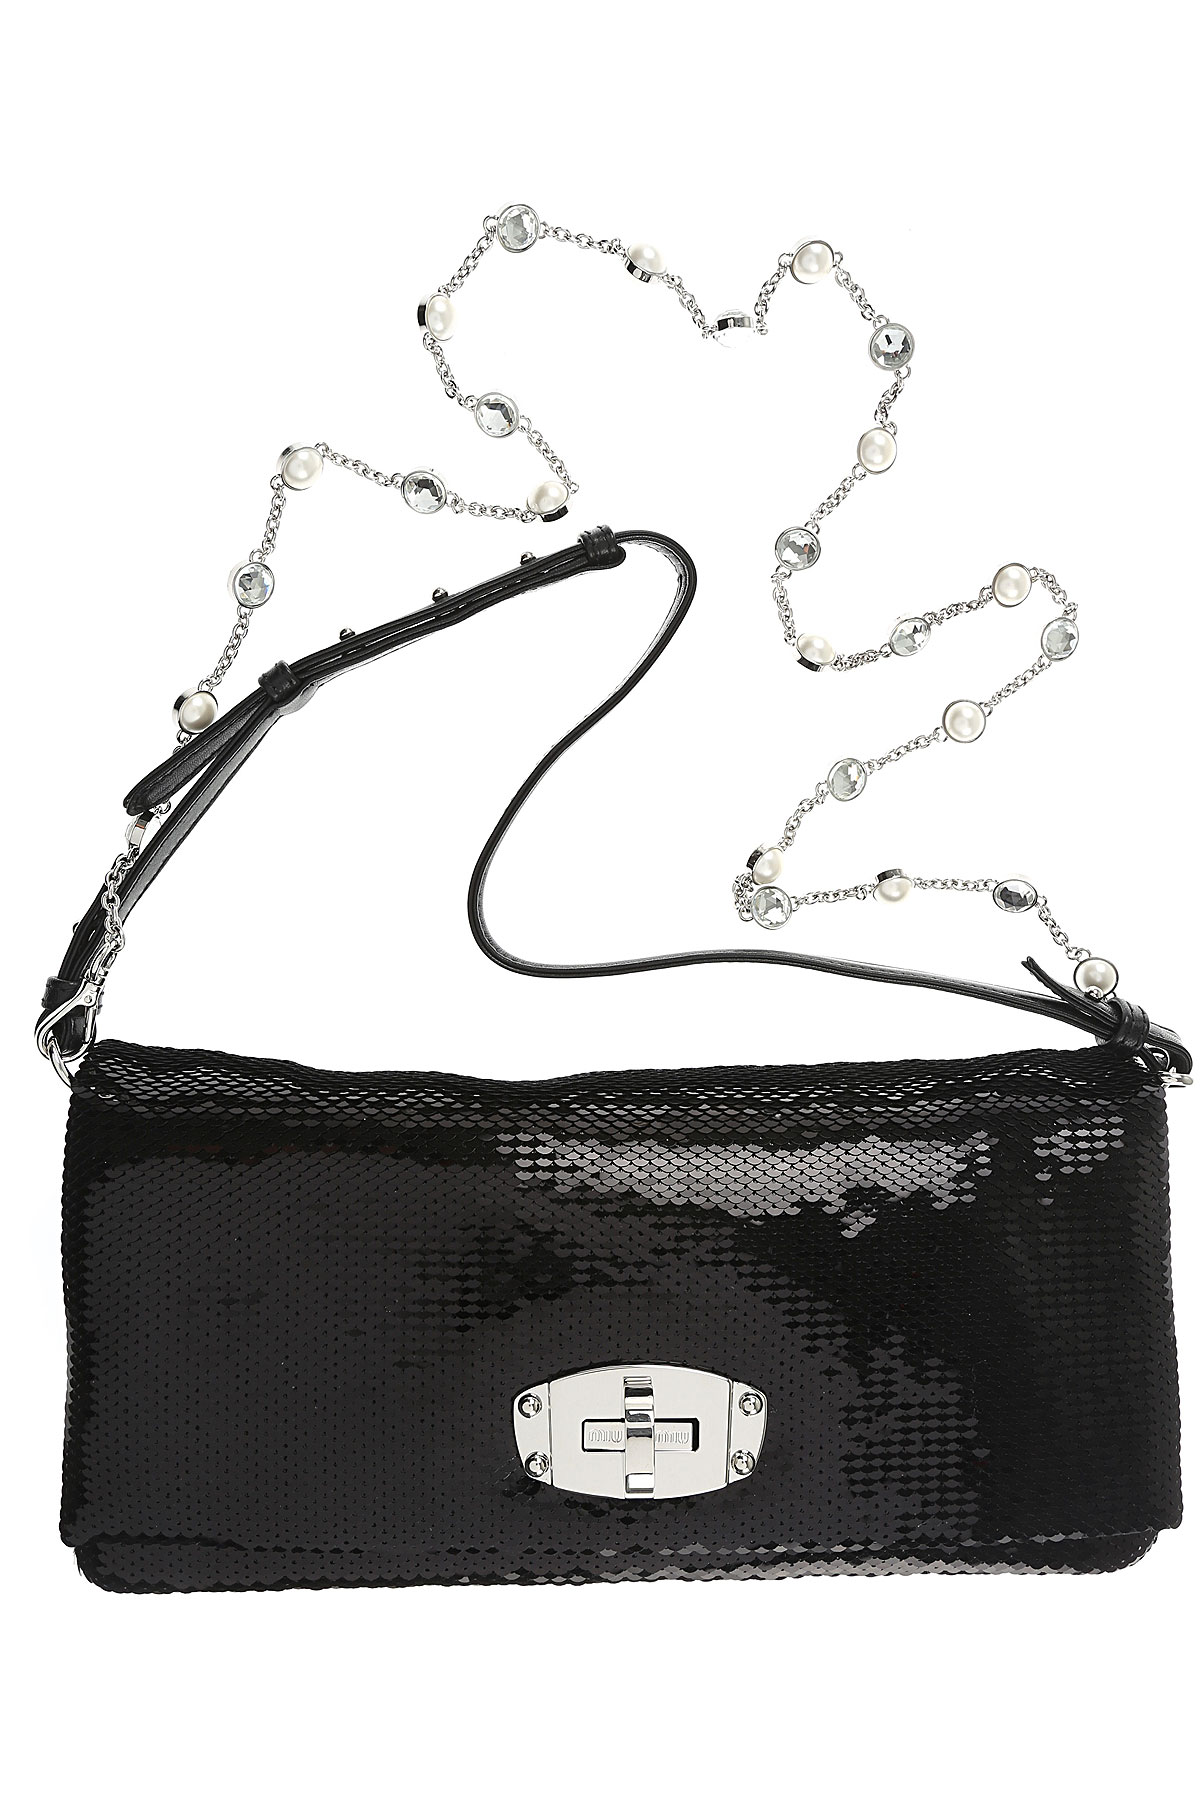 Handbags Miu Miu, Style code: 5bd233-2eyb-f0002